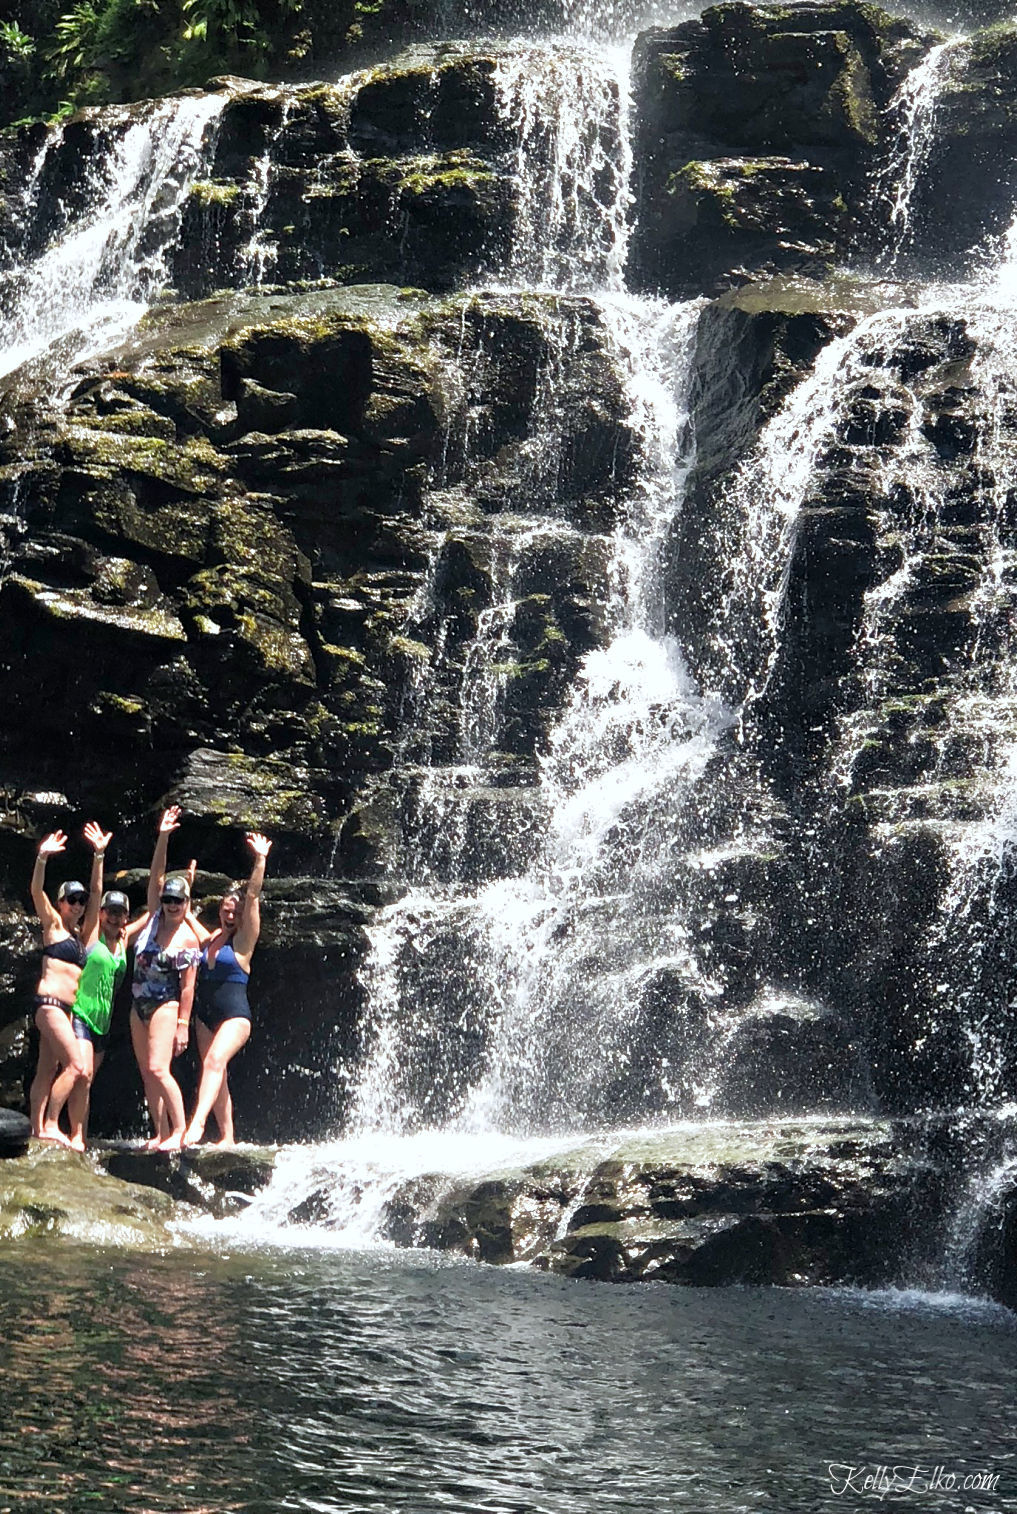 52 Weeks of Yes - swim under a waterfall! kellyelko.com #travel #waterfall #costarica #vacation #travelblog #52WeeksofYes